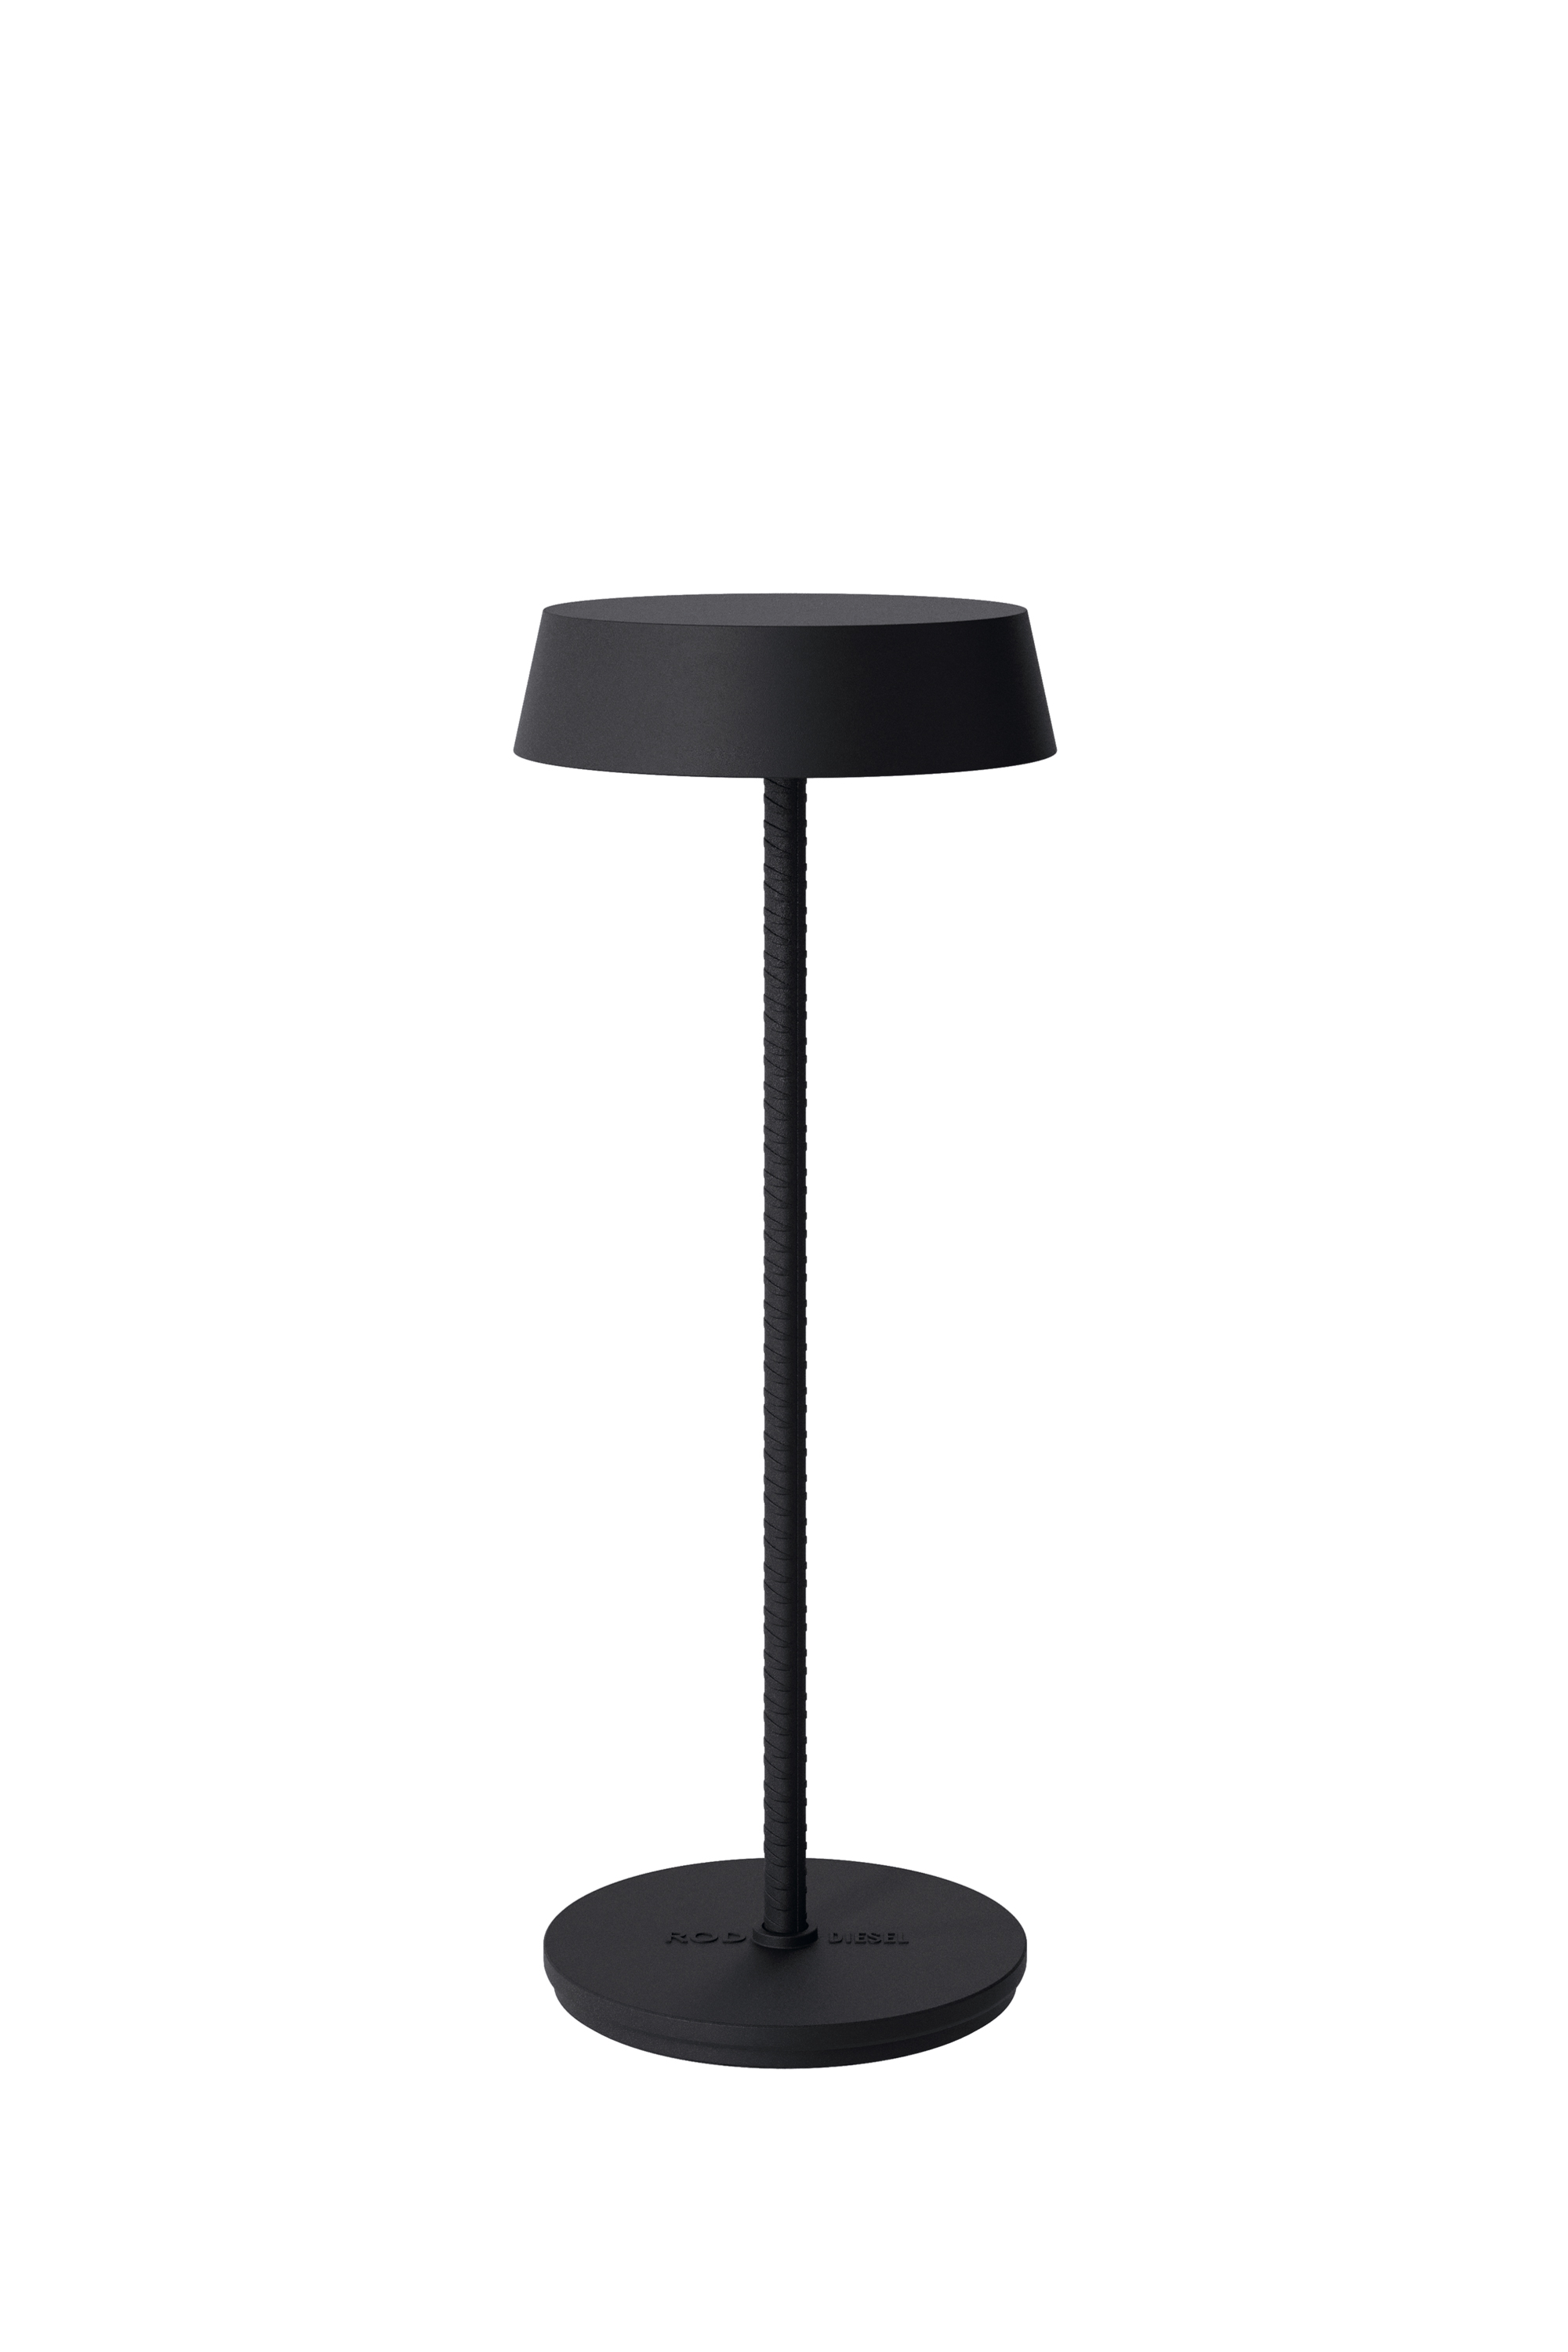 51181 2020 ROD CORDLESS TABLE LAMP DARK, Negro - Iluminación